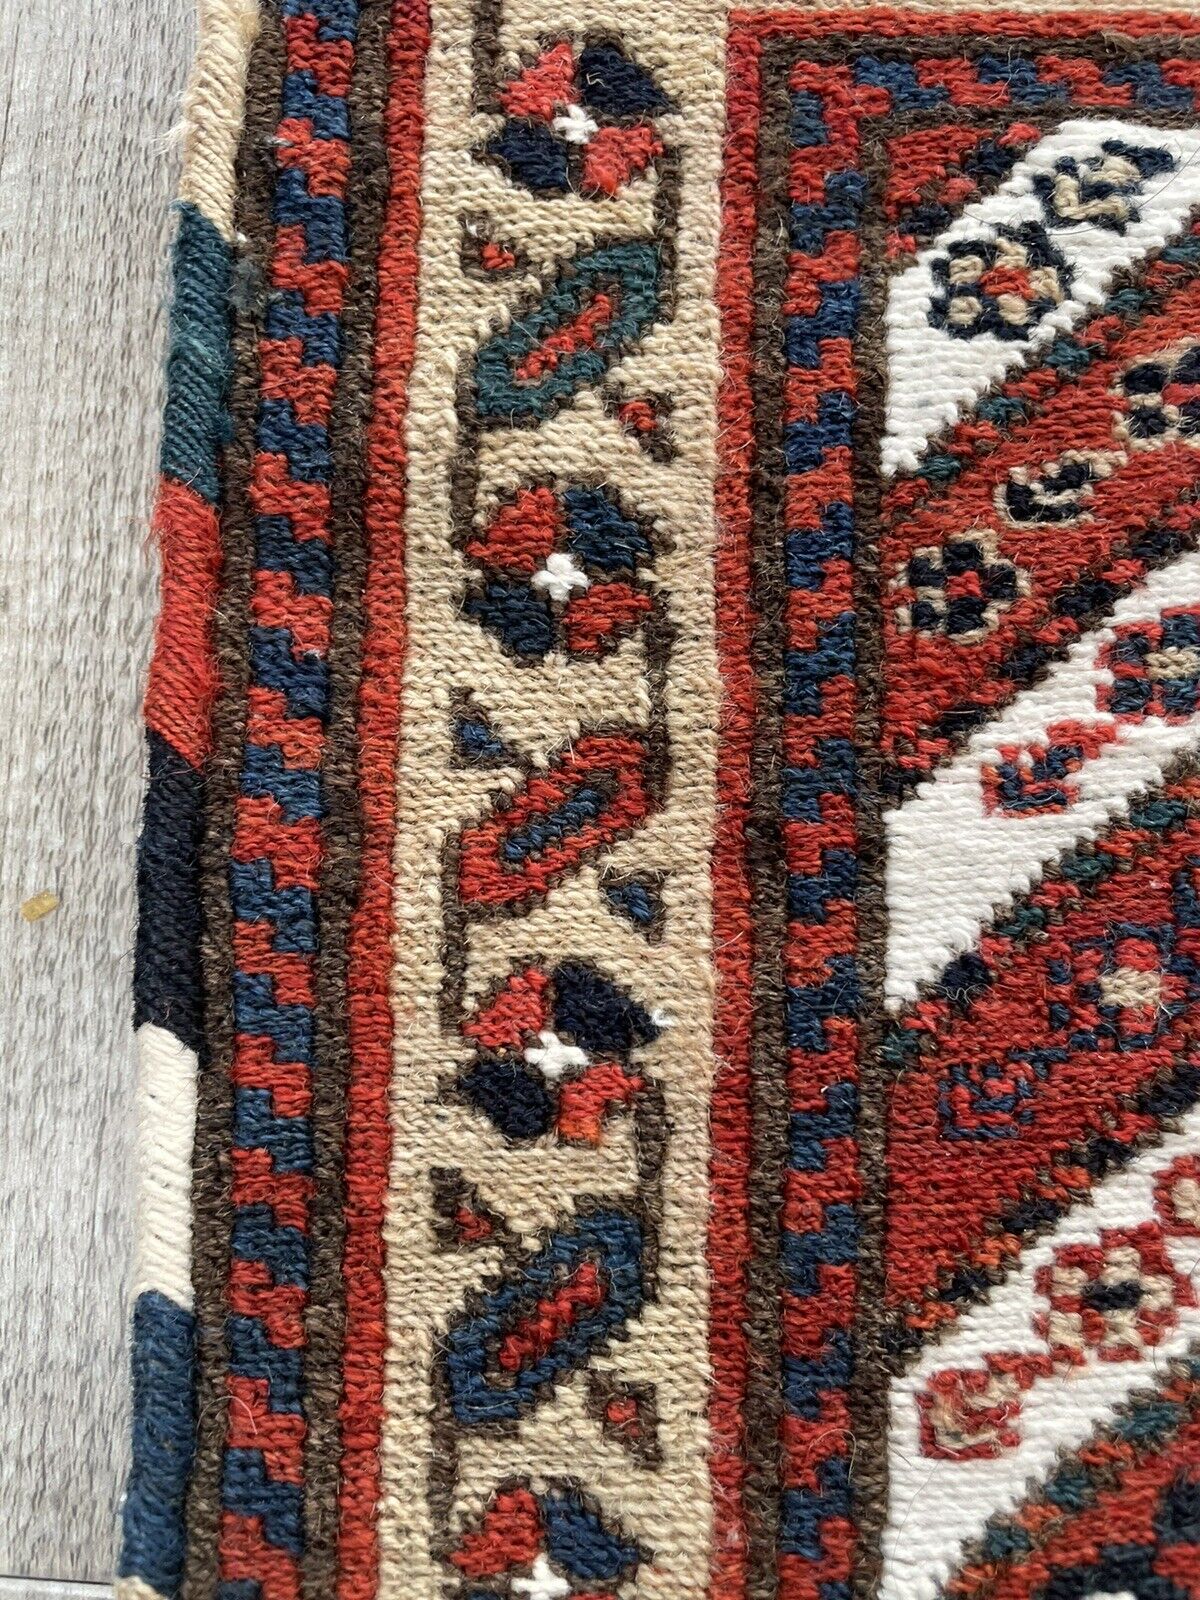 Close-up of craftsmanship on Handmade Vintage Persian Kurdish Salt Bag - Detailed view highlighting the meticulous craftsmanship involved in weaving the intricate patterns.